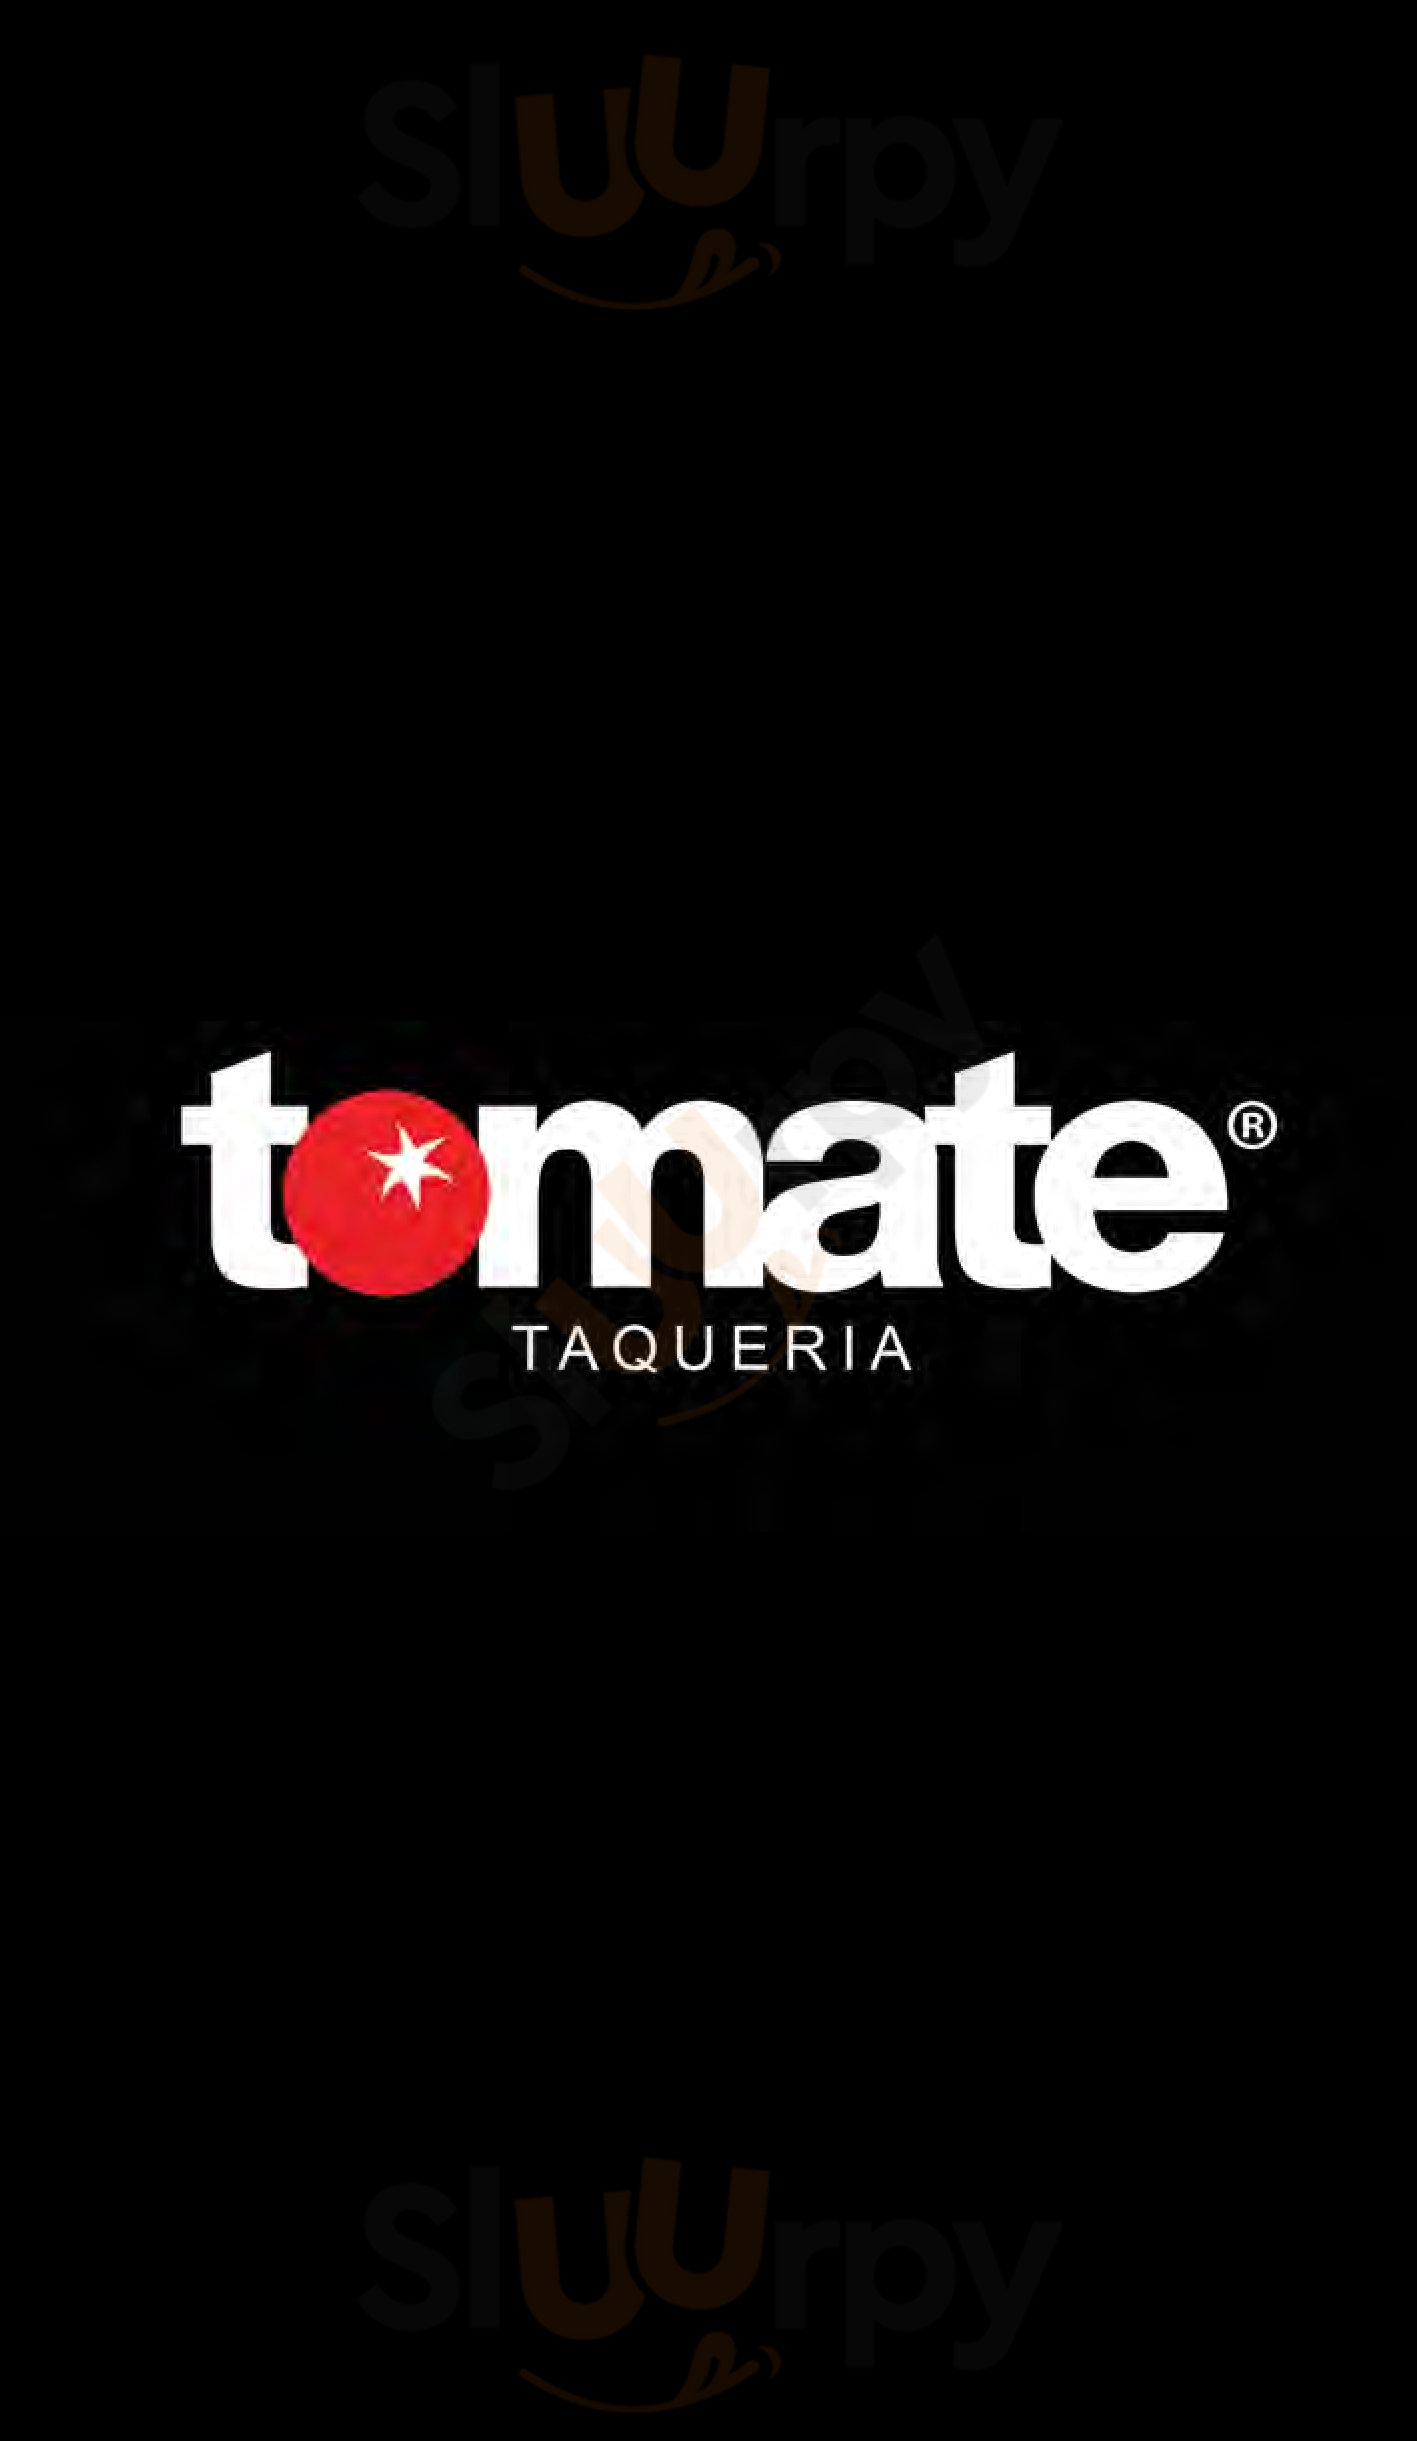 La Tomate Taqueria Guadalajara Menu - 1